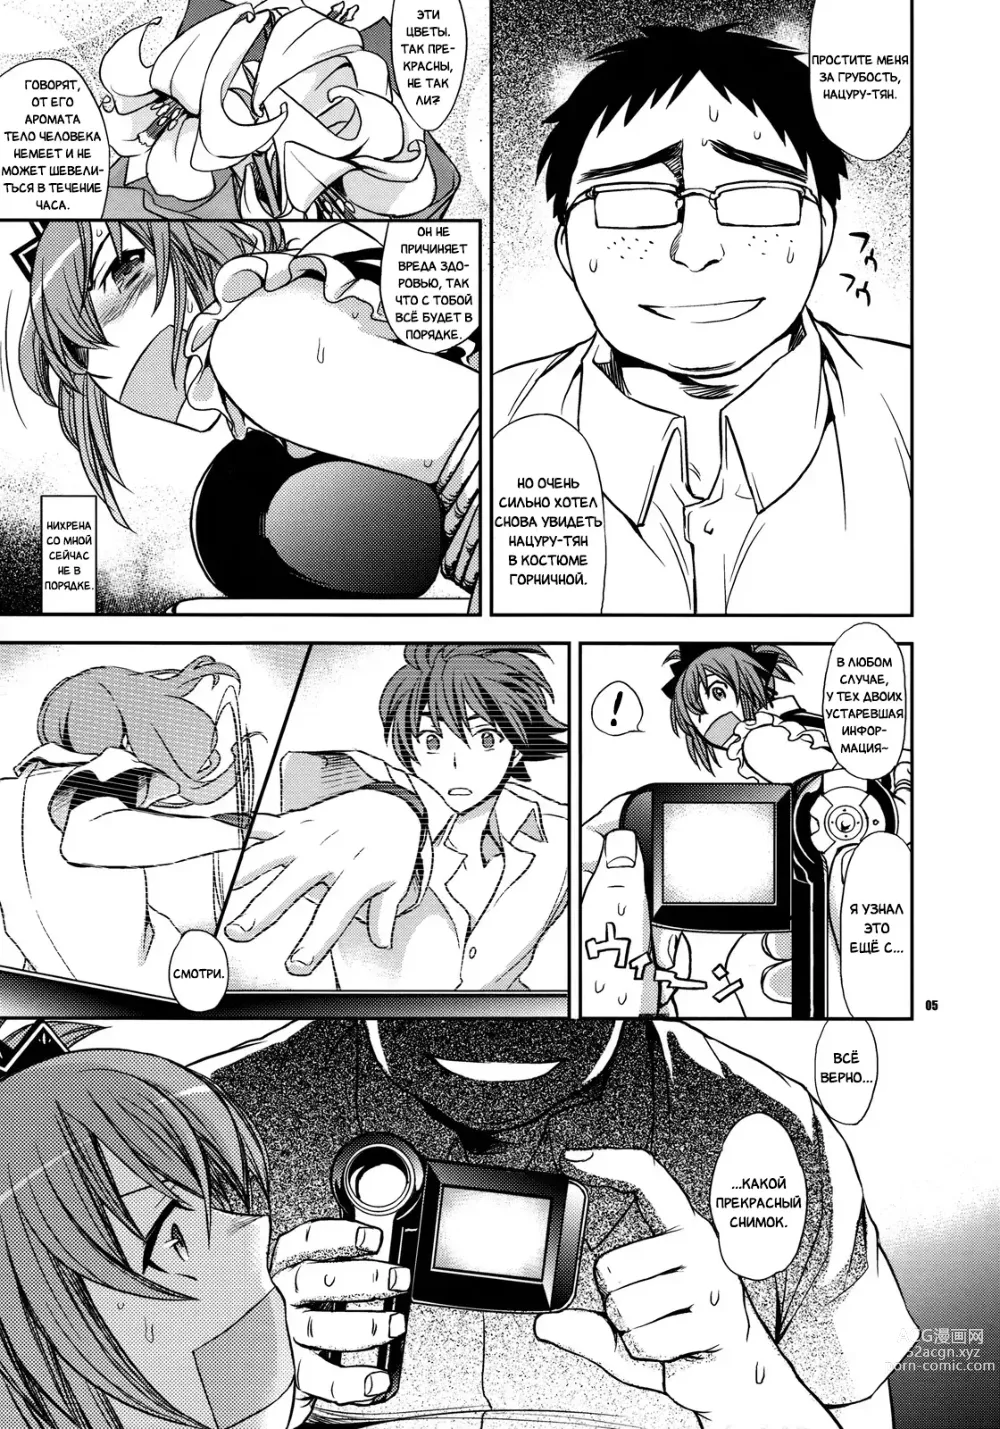 Page 4 of doujinshi Её выбор - случай с Нацуру Сэно